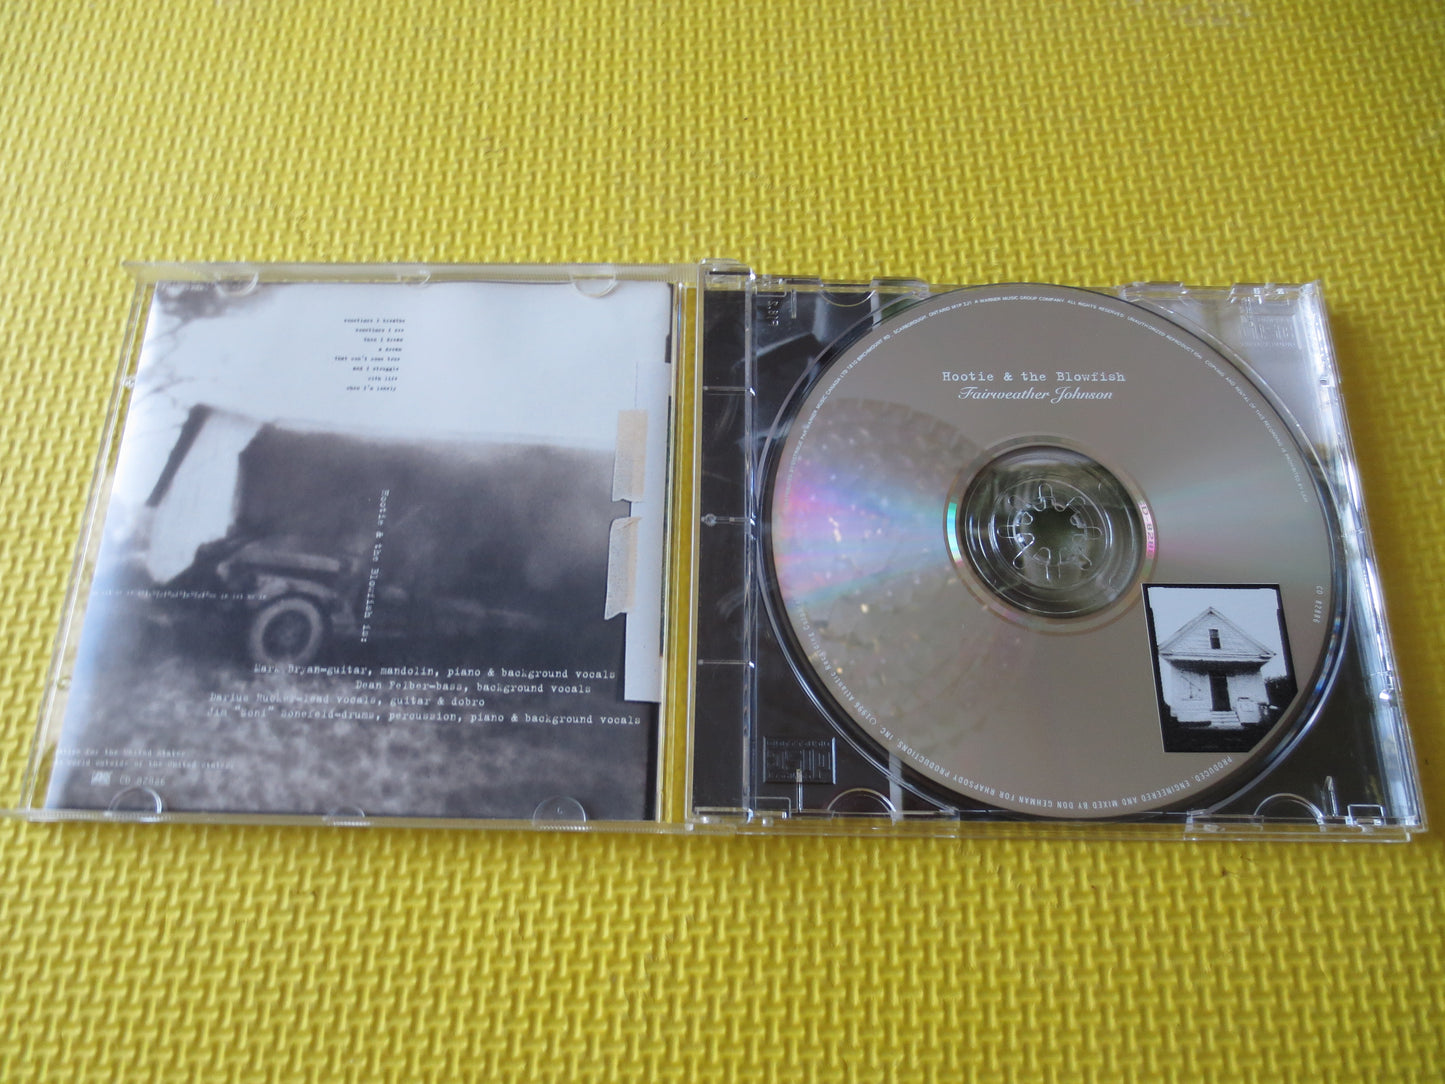 HOOTIE and the BLOWFISH, FAIRWEATHER Johnson, Alternative Rock Cds, Classic Rock Cds, Pop Rock Cds, Music Cd, 1996 Compact Discs